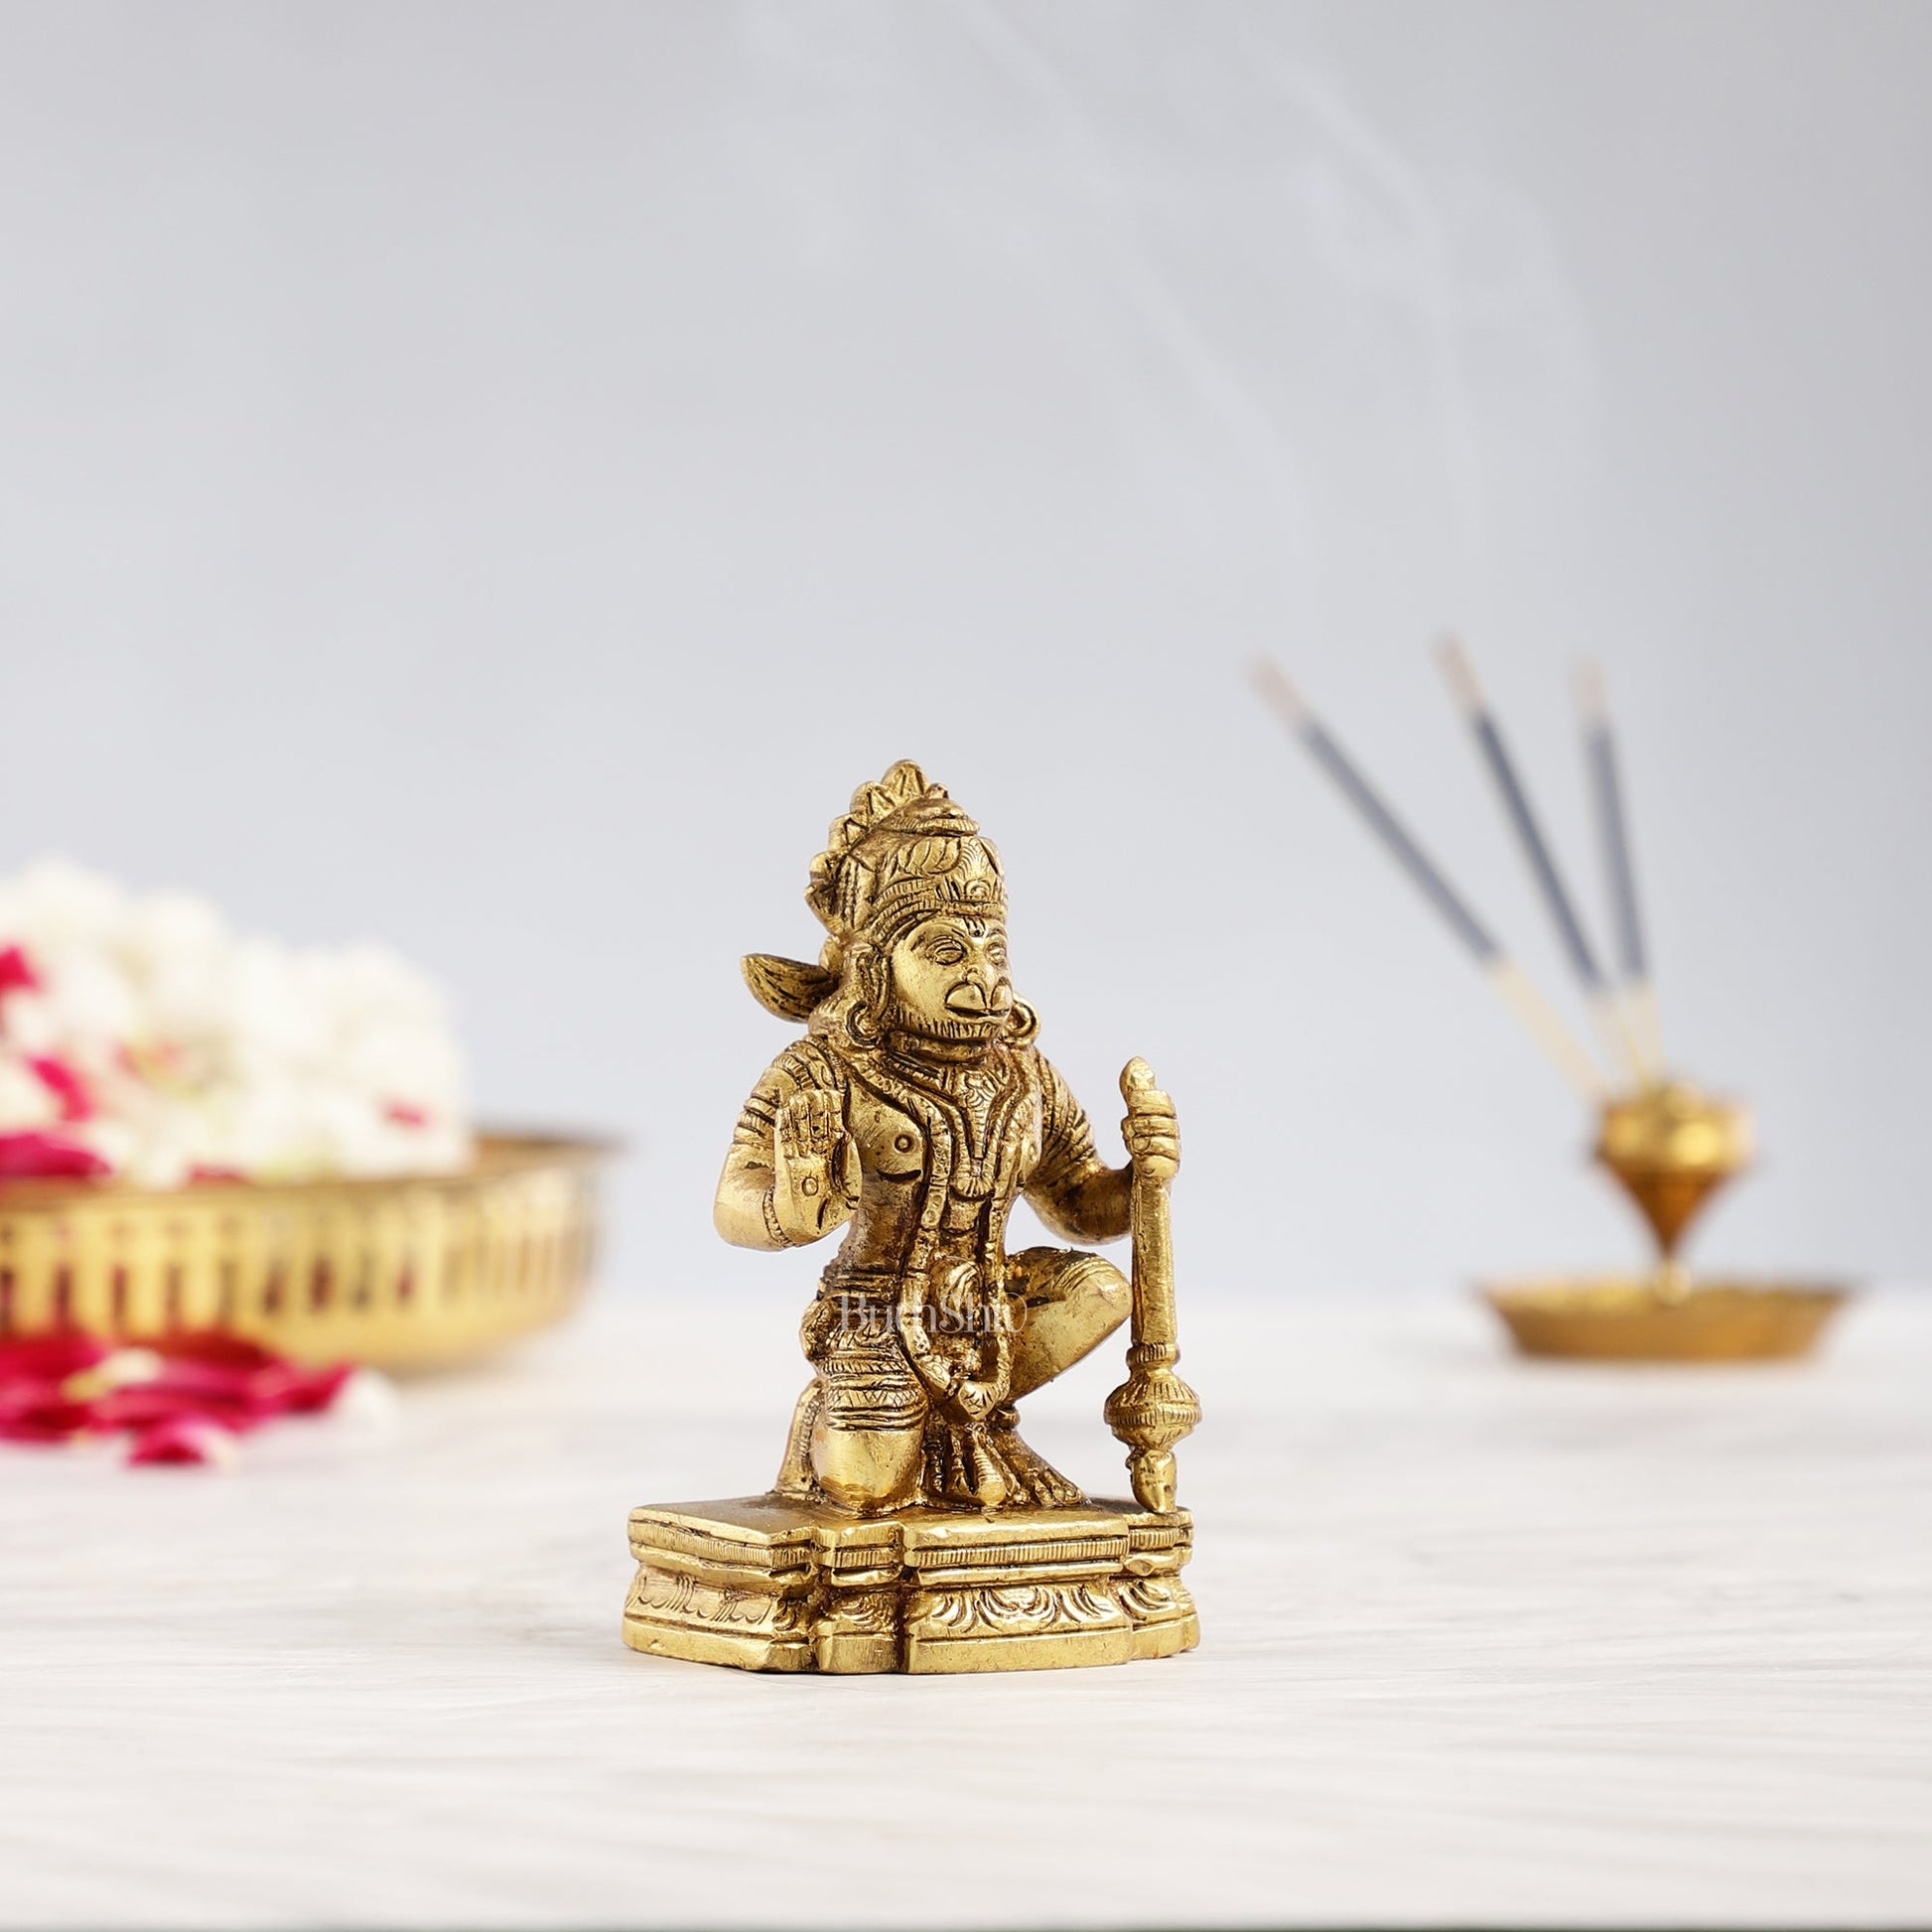 Superfine Brass Blessing Lord Hanuman Murti 4 inch - Budhshiv.com